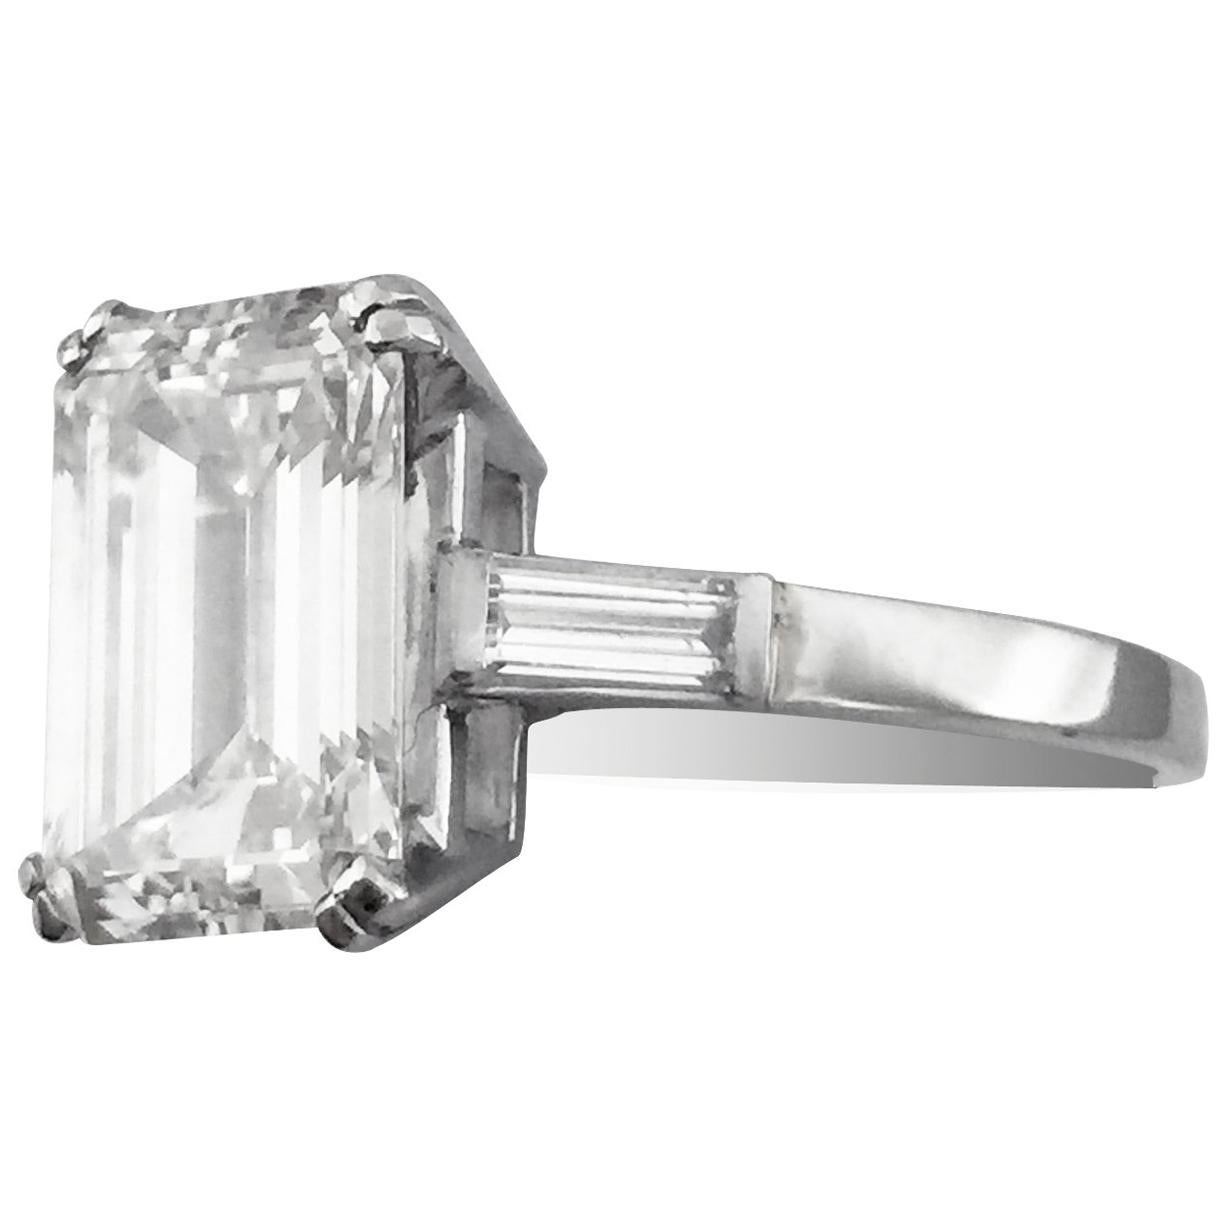 Engagement ring set with 3.82 Carat Emerald-Cut Diamond